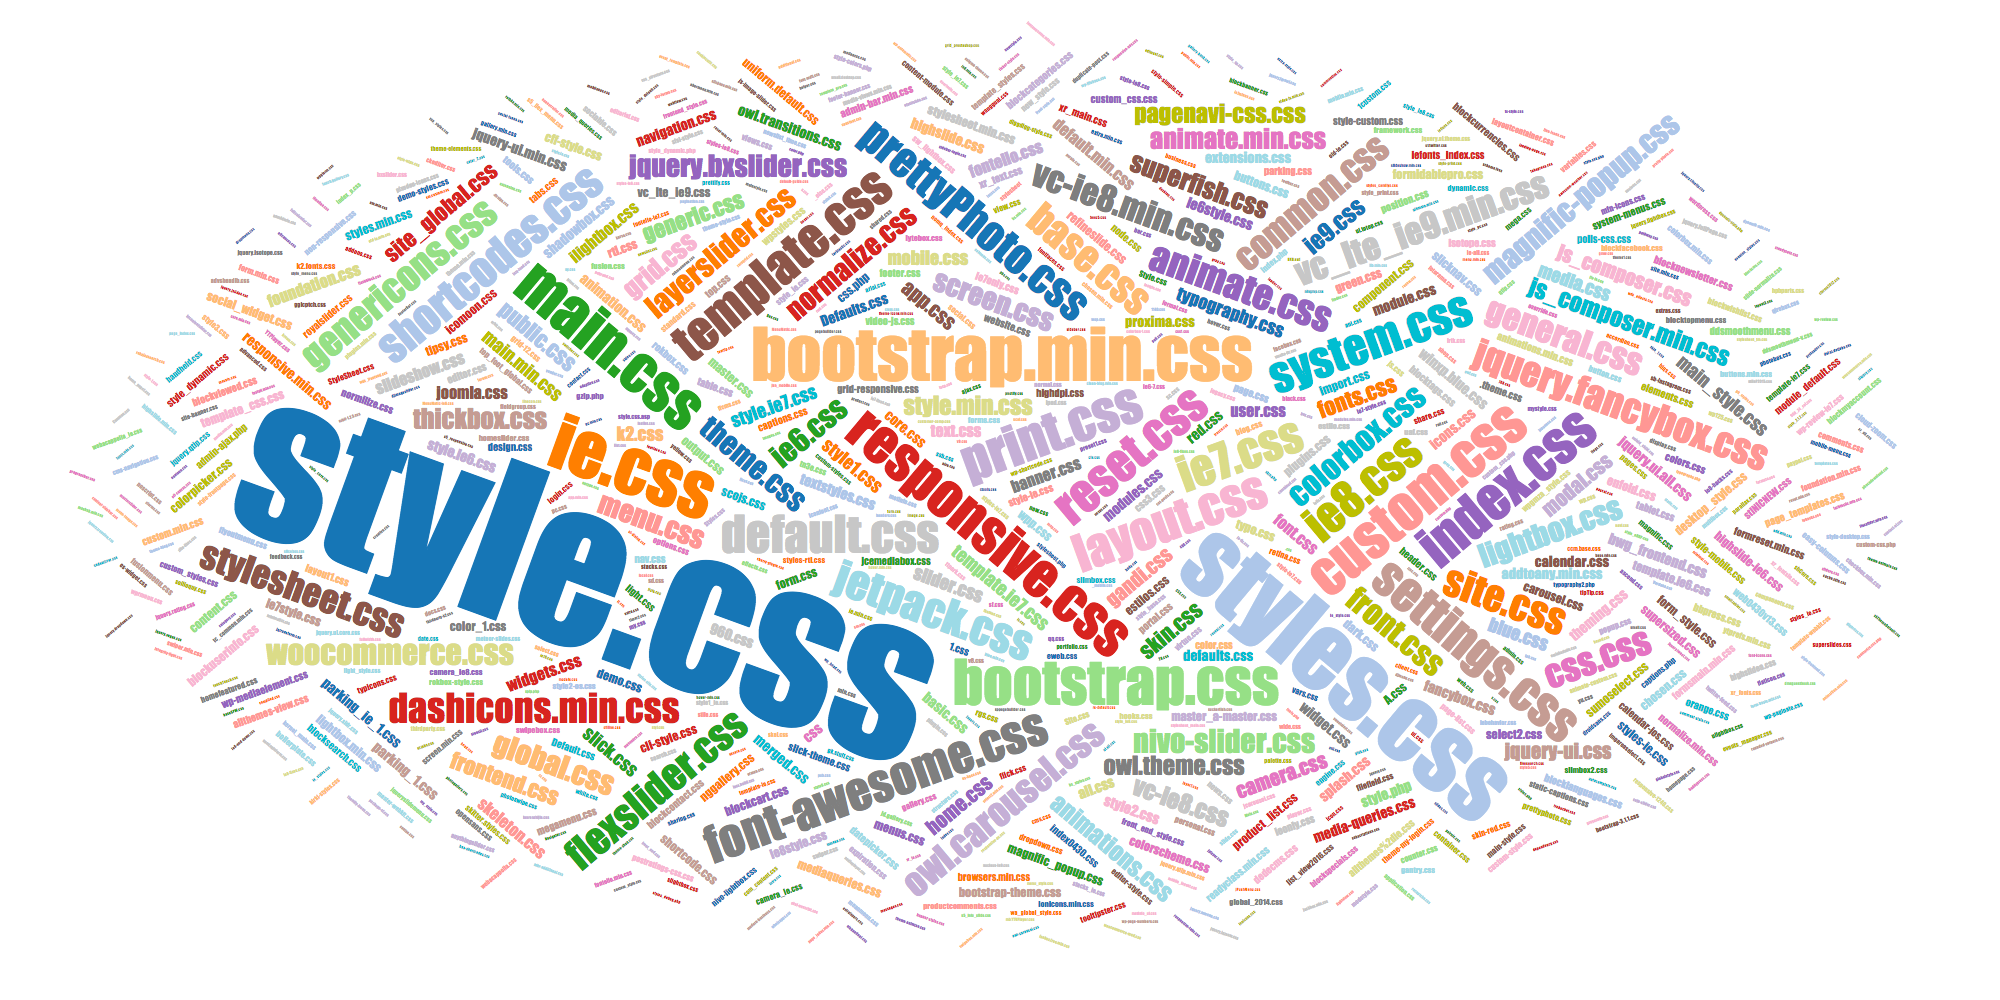 Popular names of CSS files global.css, genericons.css, etc.